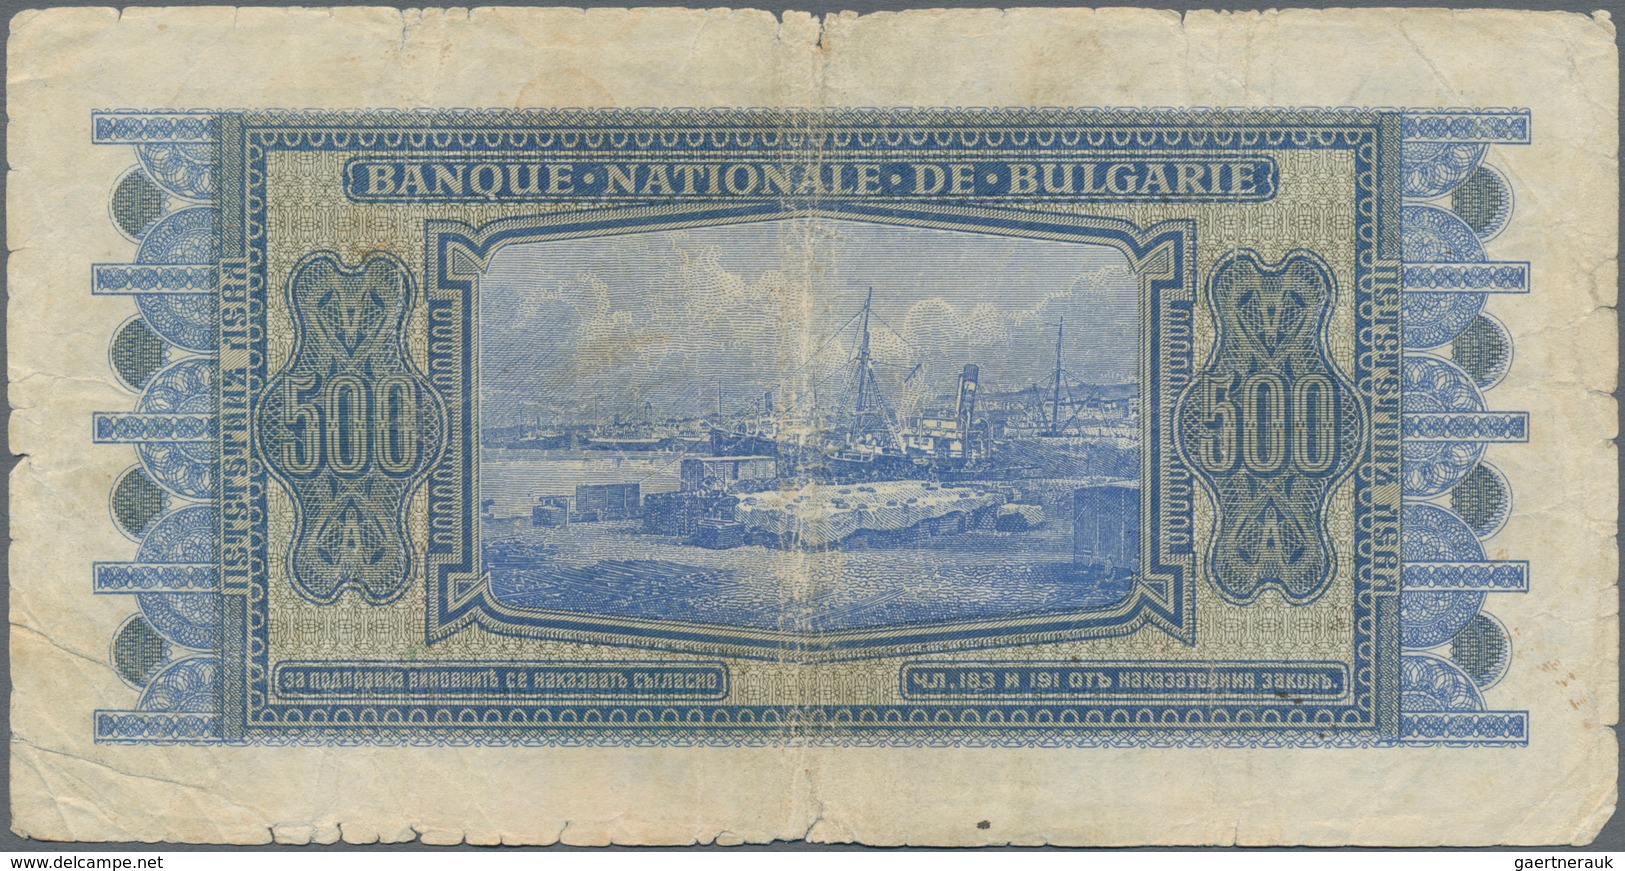 Bulgaria / Bulgarien: Very nice set with 11 banknotes Bulgaria ND(1916) till 1947 comprising 100 Gol